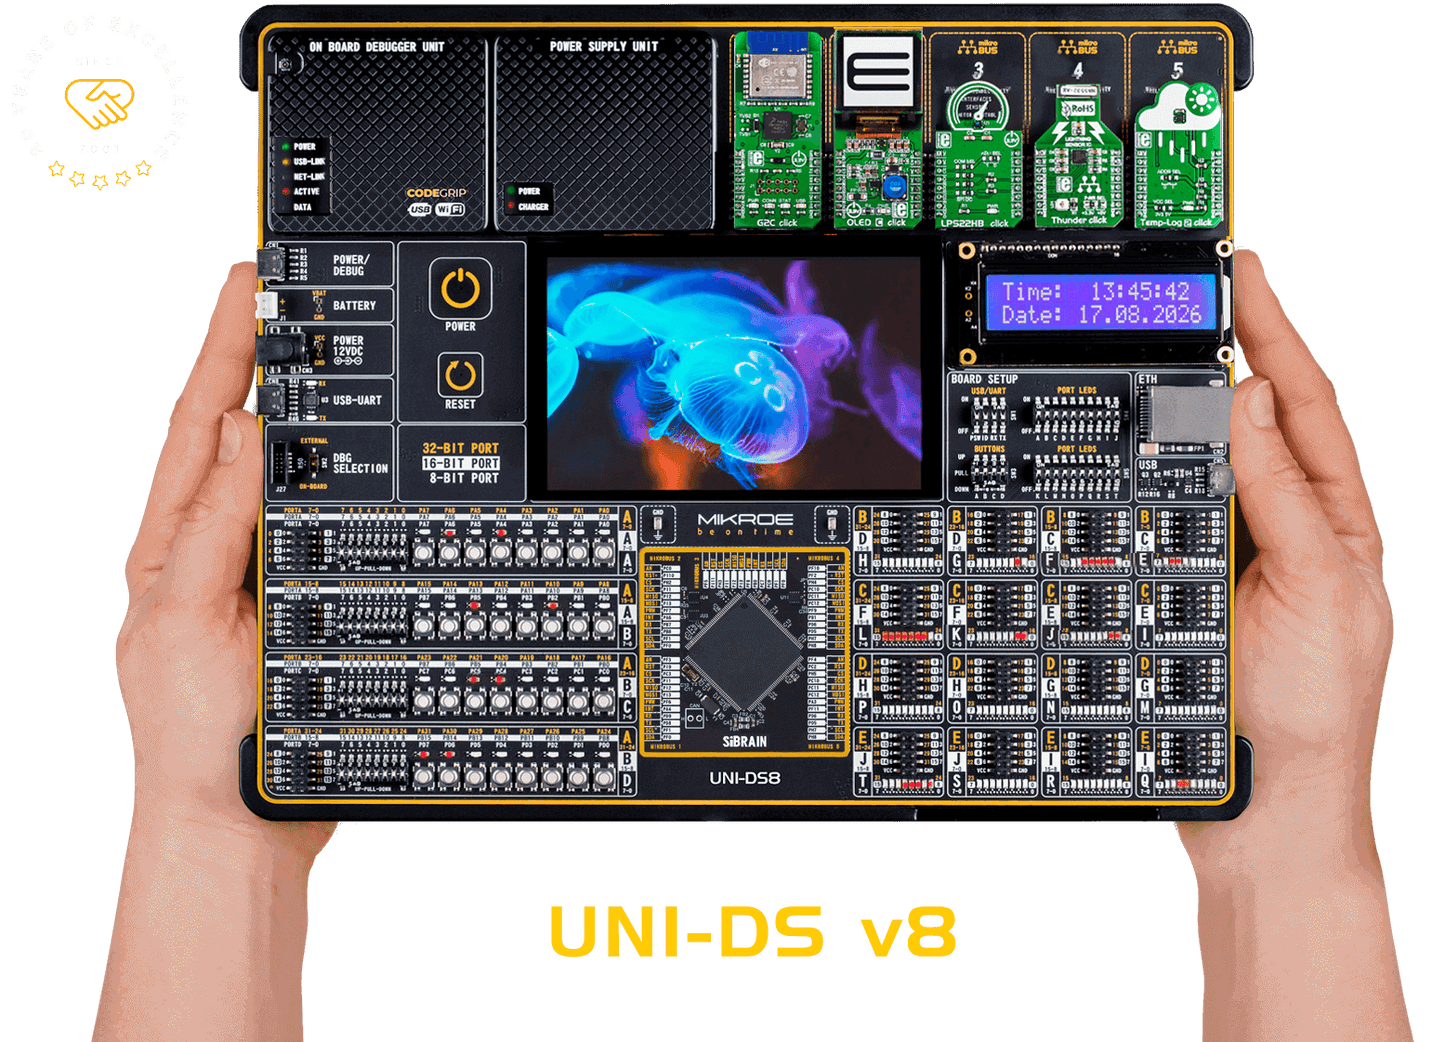 UNI-DS V8